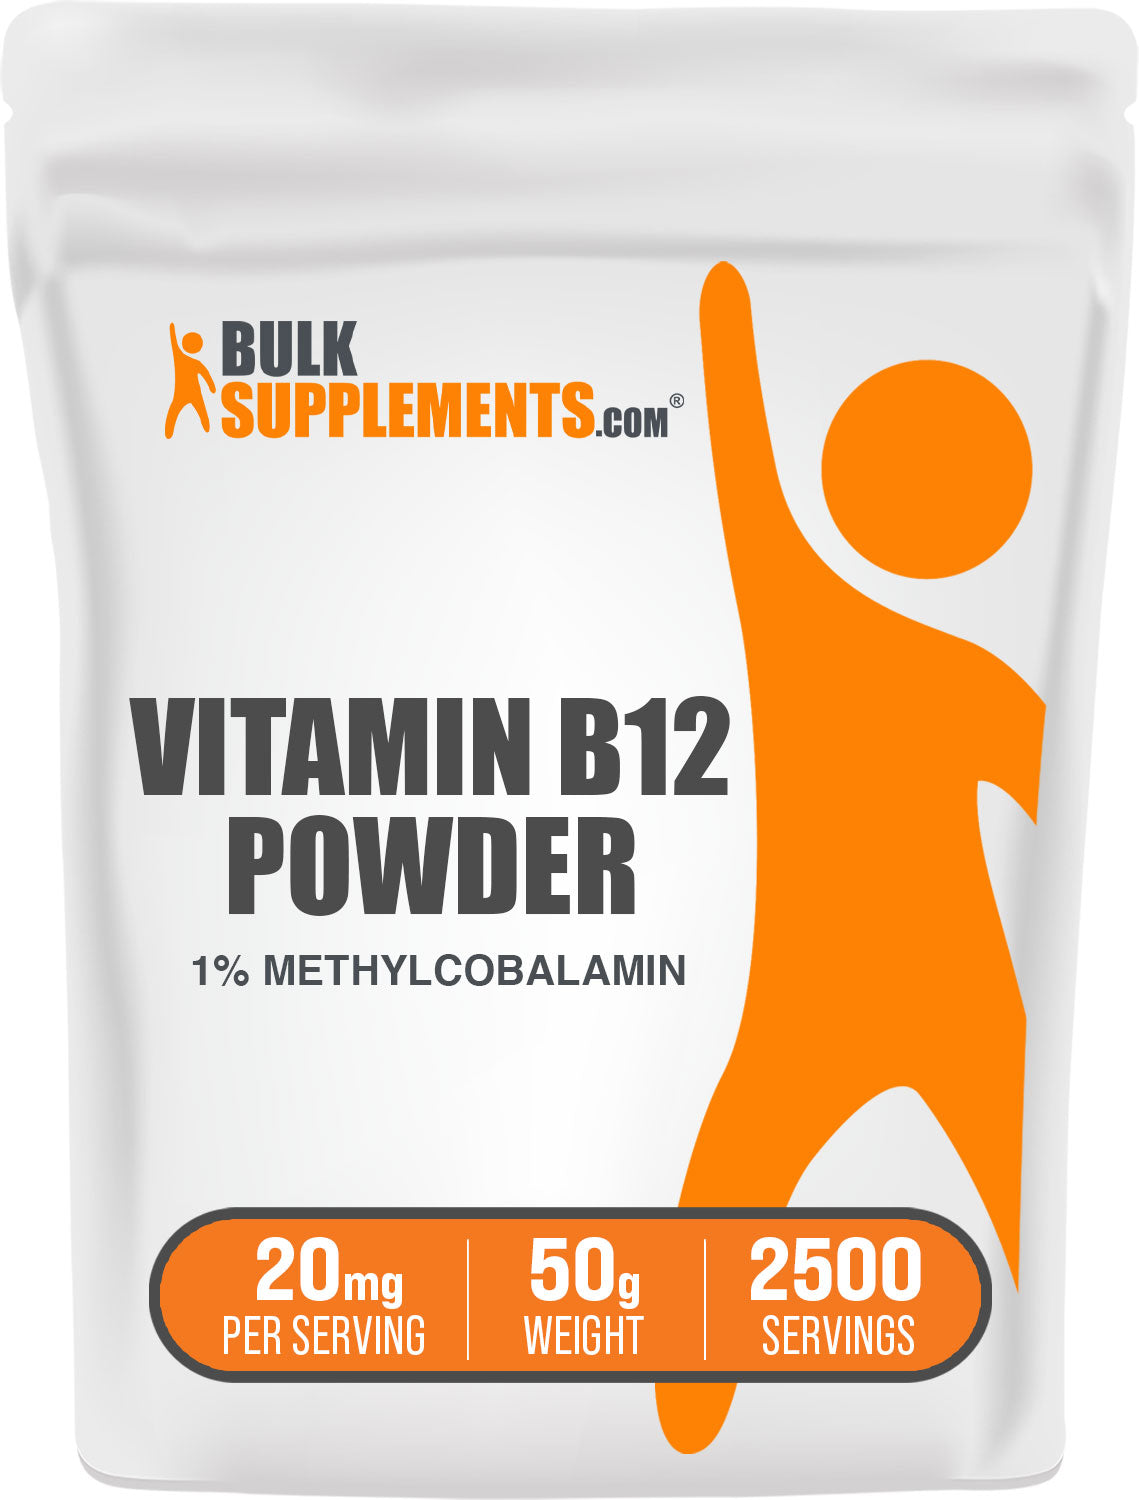 BulkSupplements Vitamin B12 Powder 1% Methylcobalamin 50g bag